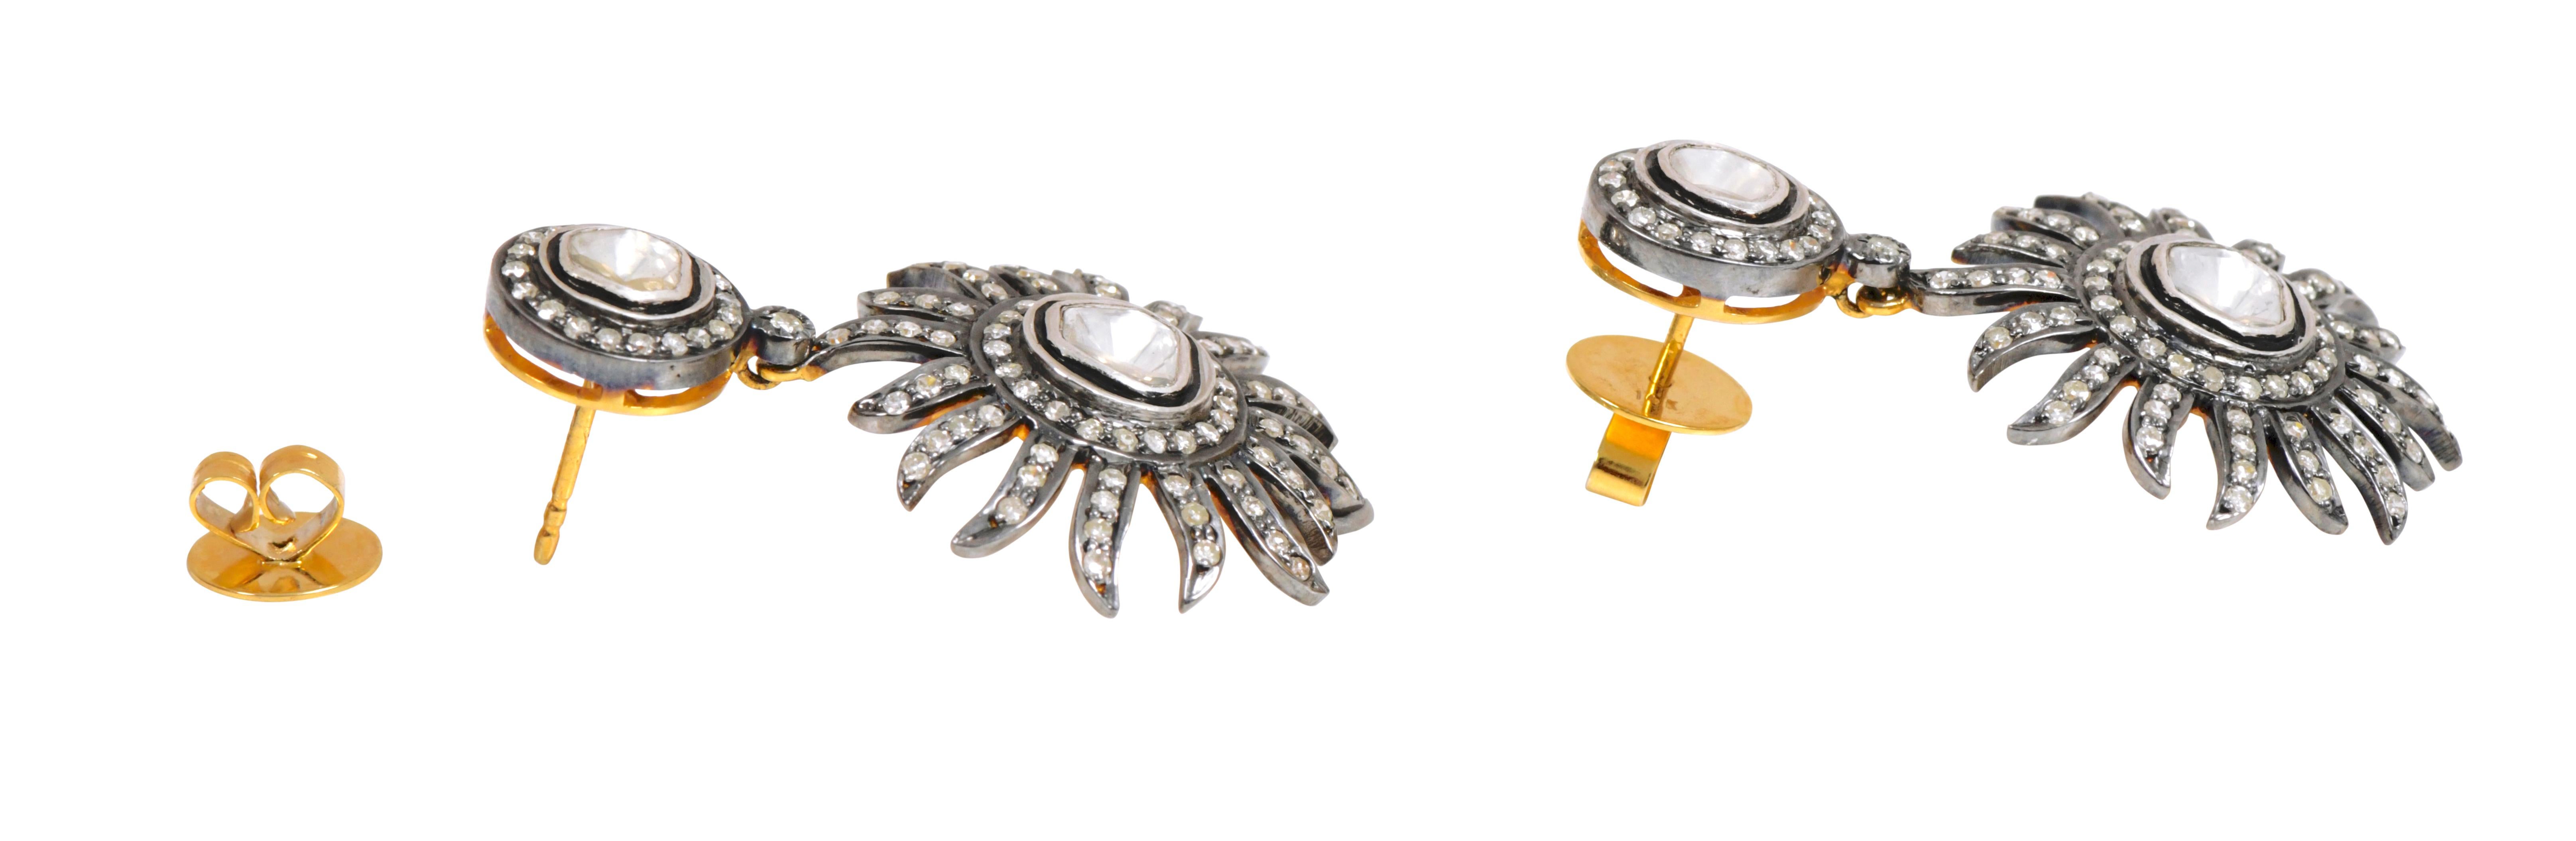 2.28 Carat Diamond Sunburst Dangle Earrings in Art-Deco Style For Sale 2